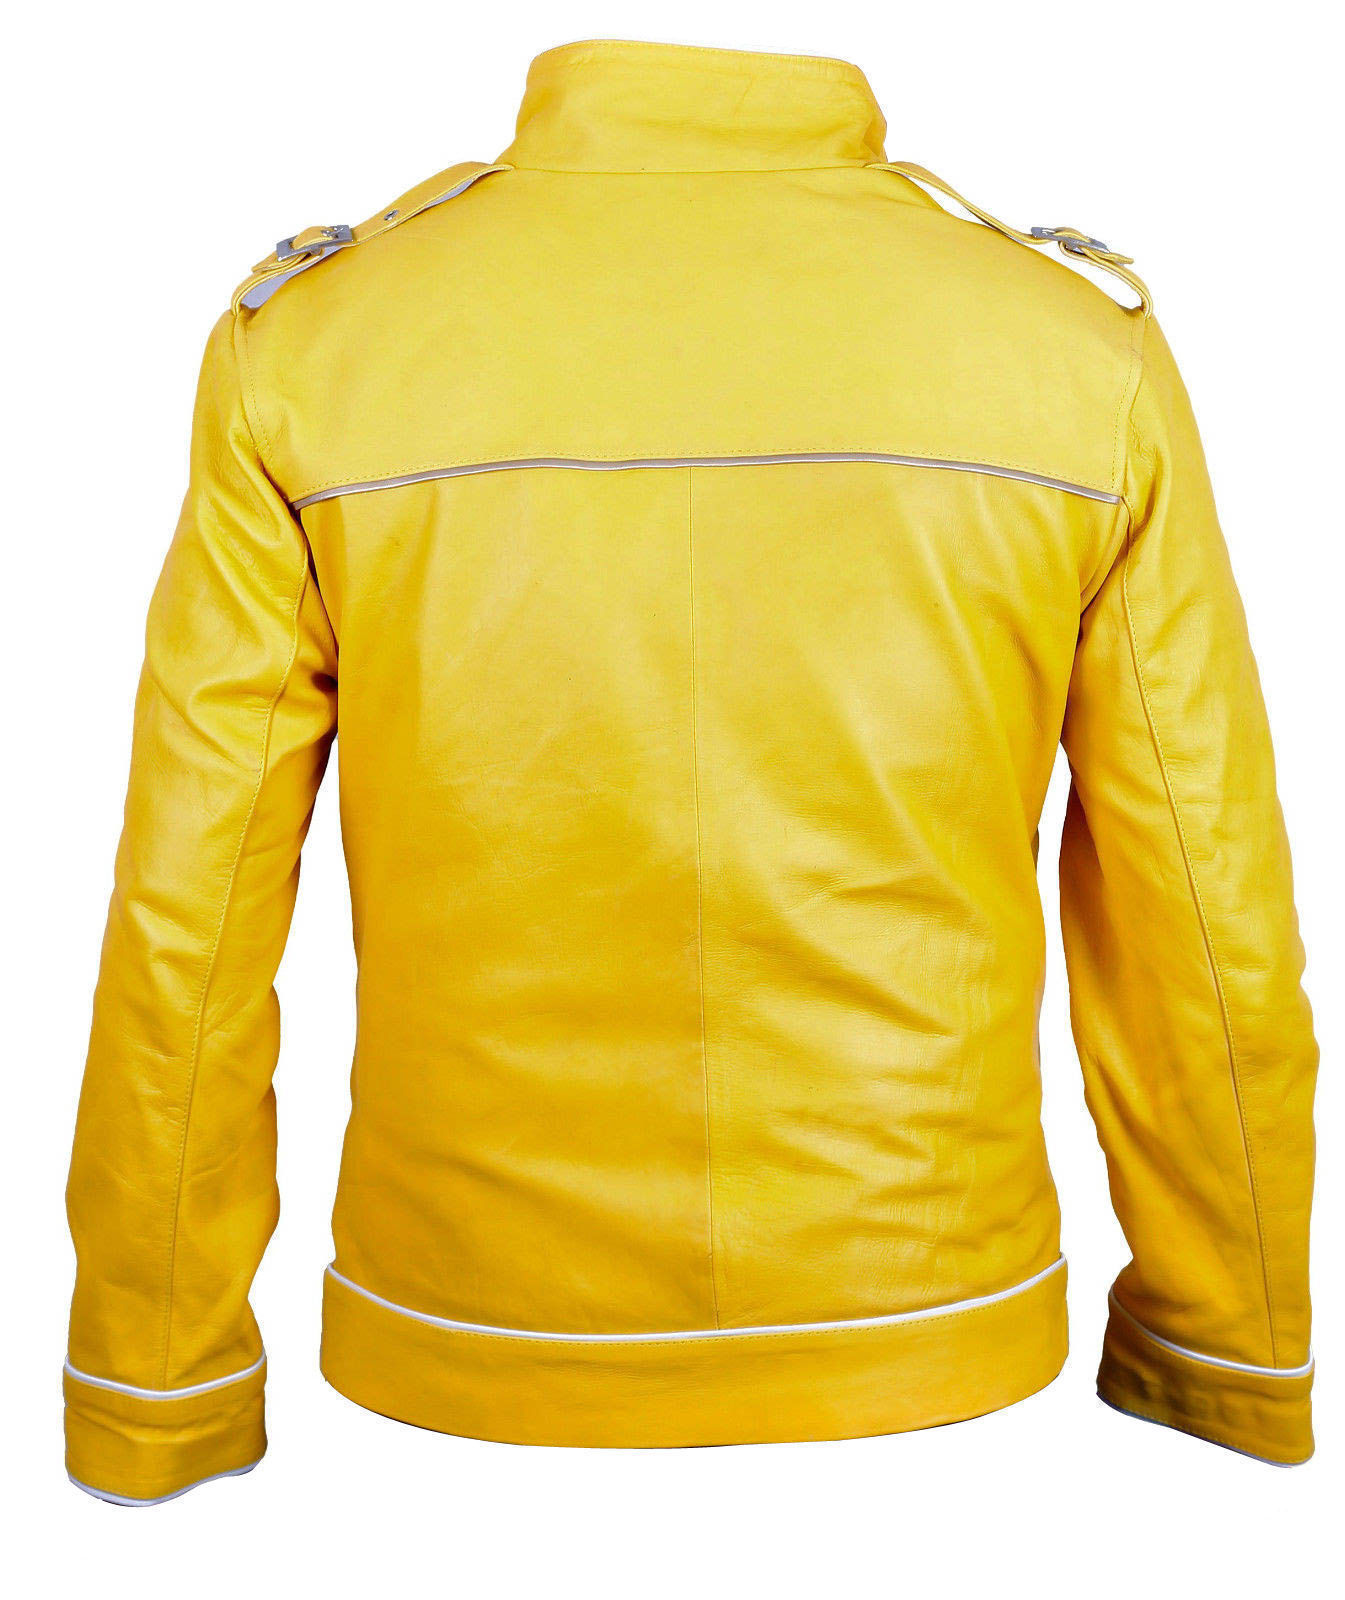 Фредди Меркури в желтой куртке